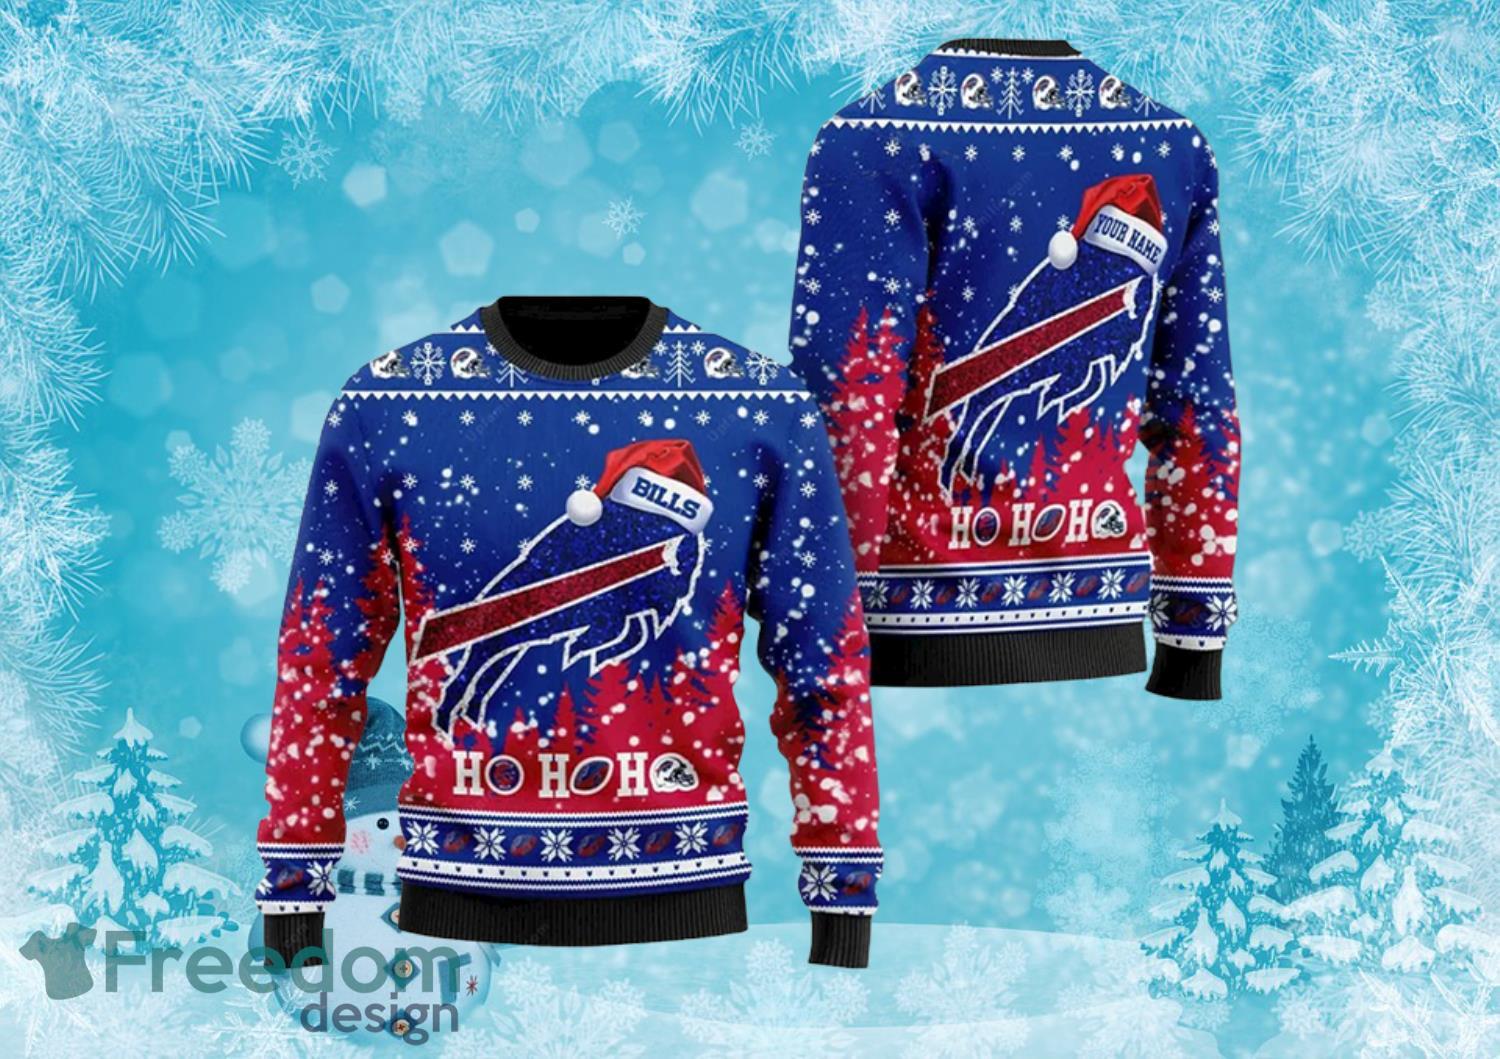 Buffalo Bills Ho Ho Ho 3D Ugliest Christmas Sweater Full Over Print Product Photo 1